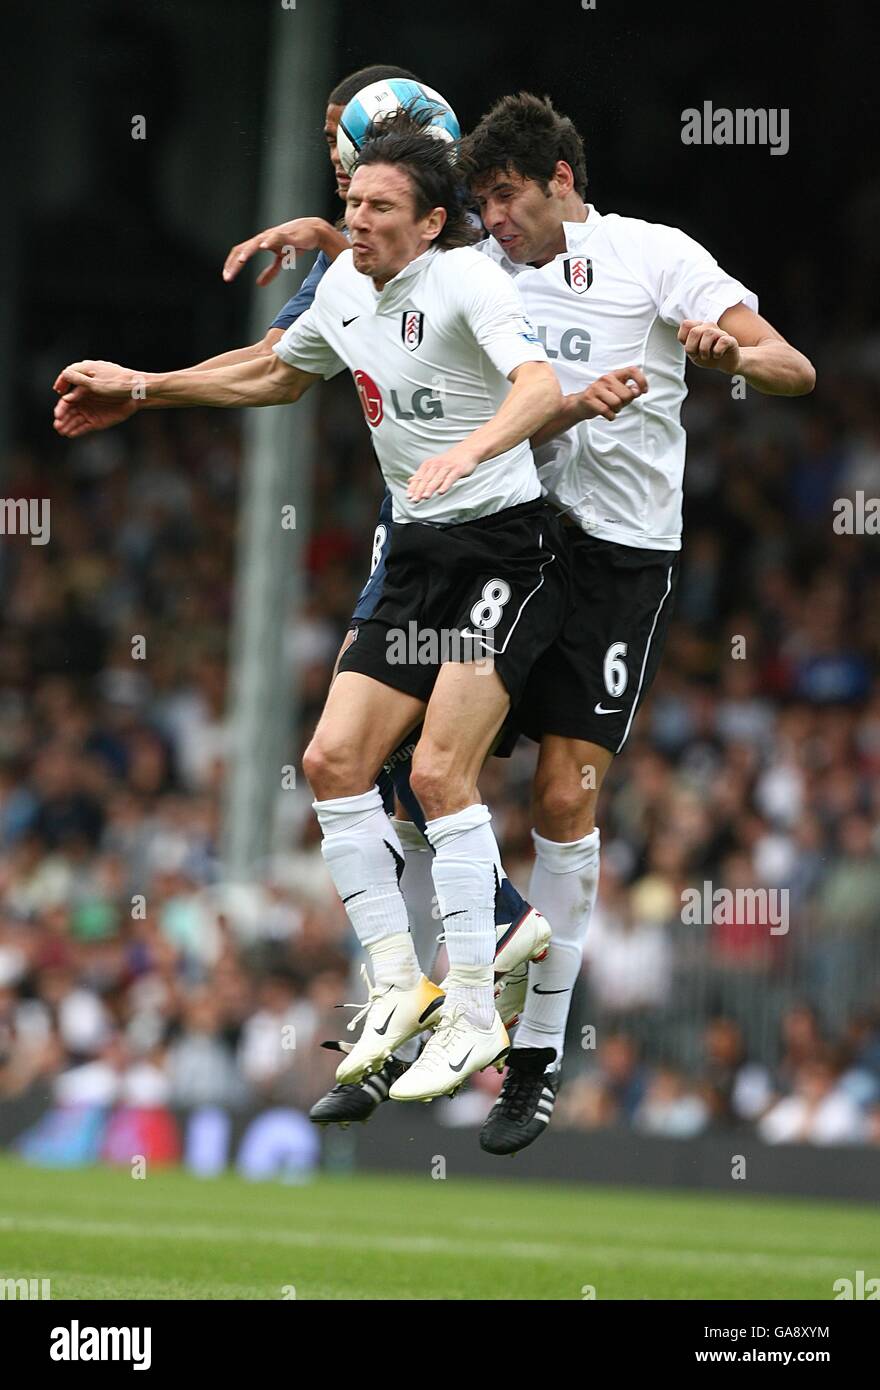 Tottenham Hotspur's Jermaine Jenas battles with Fulham's Dejan Stefanovic and Alexey Smertin for the ball Stock Photo